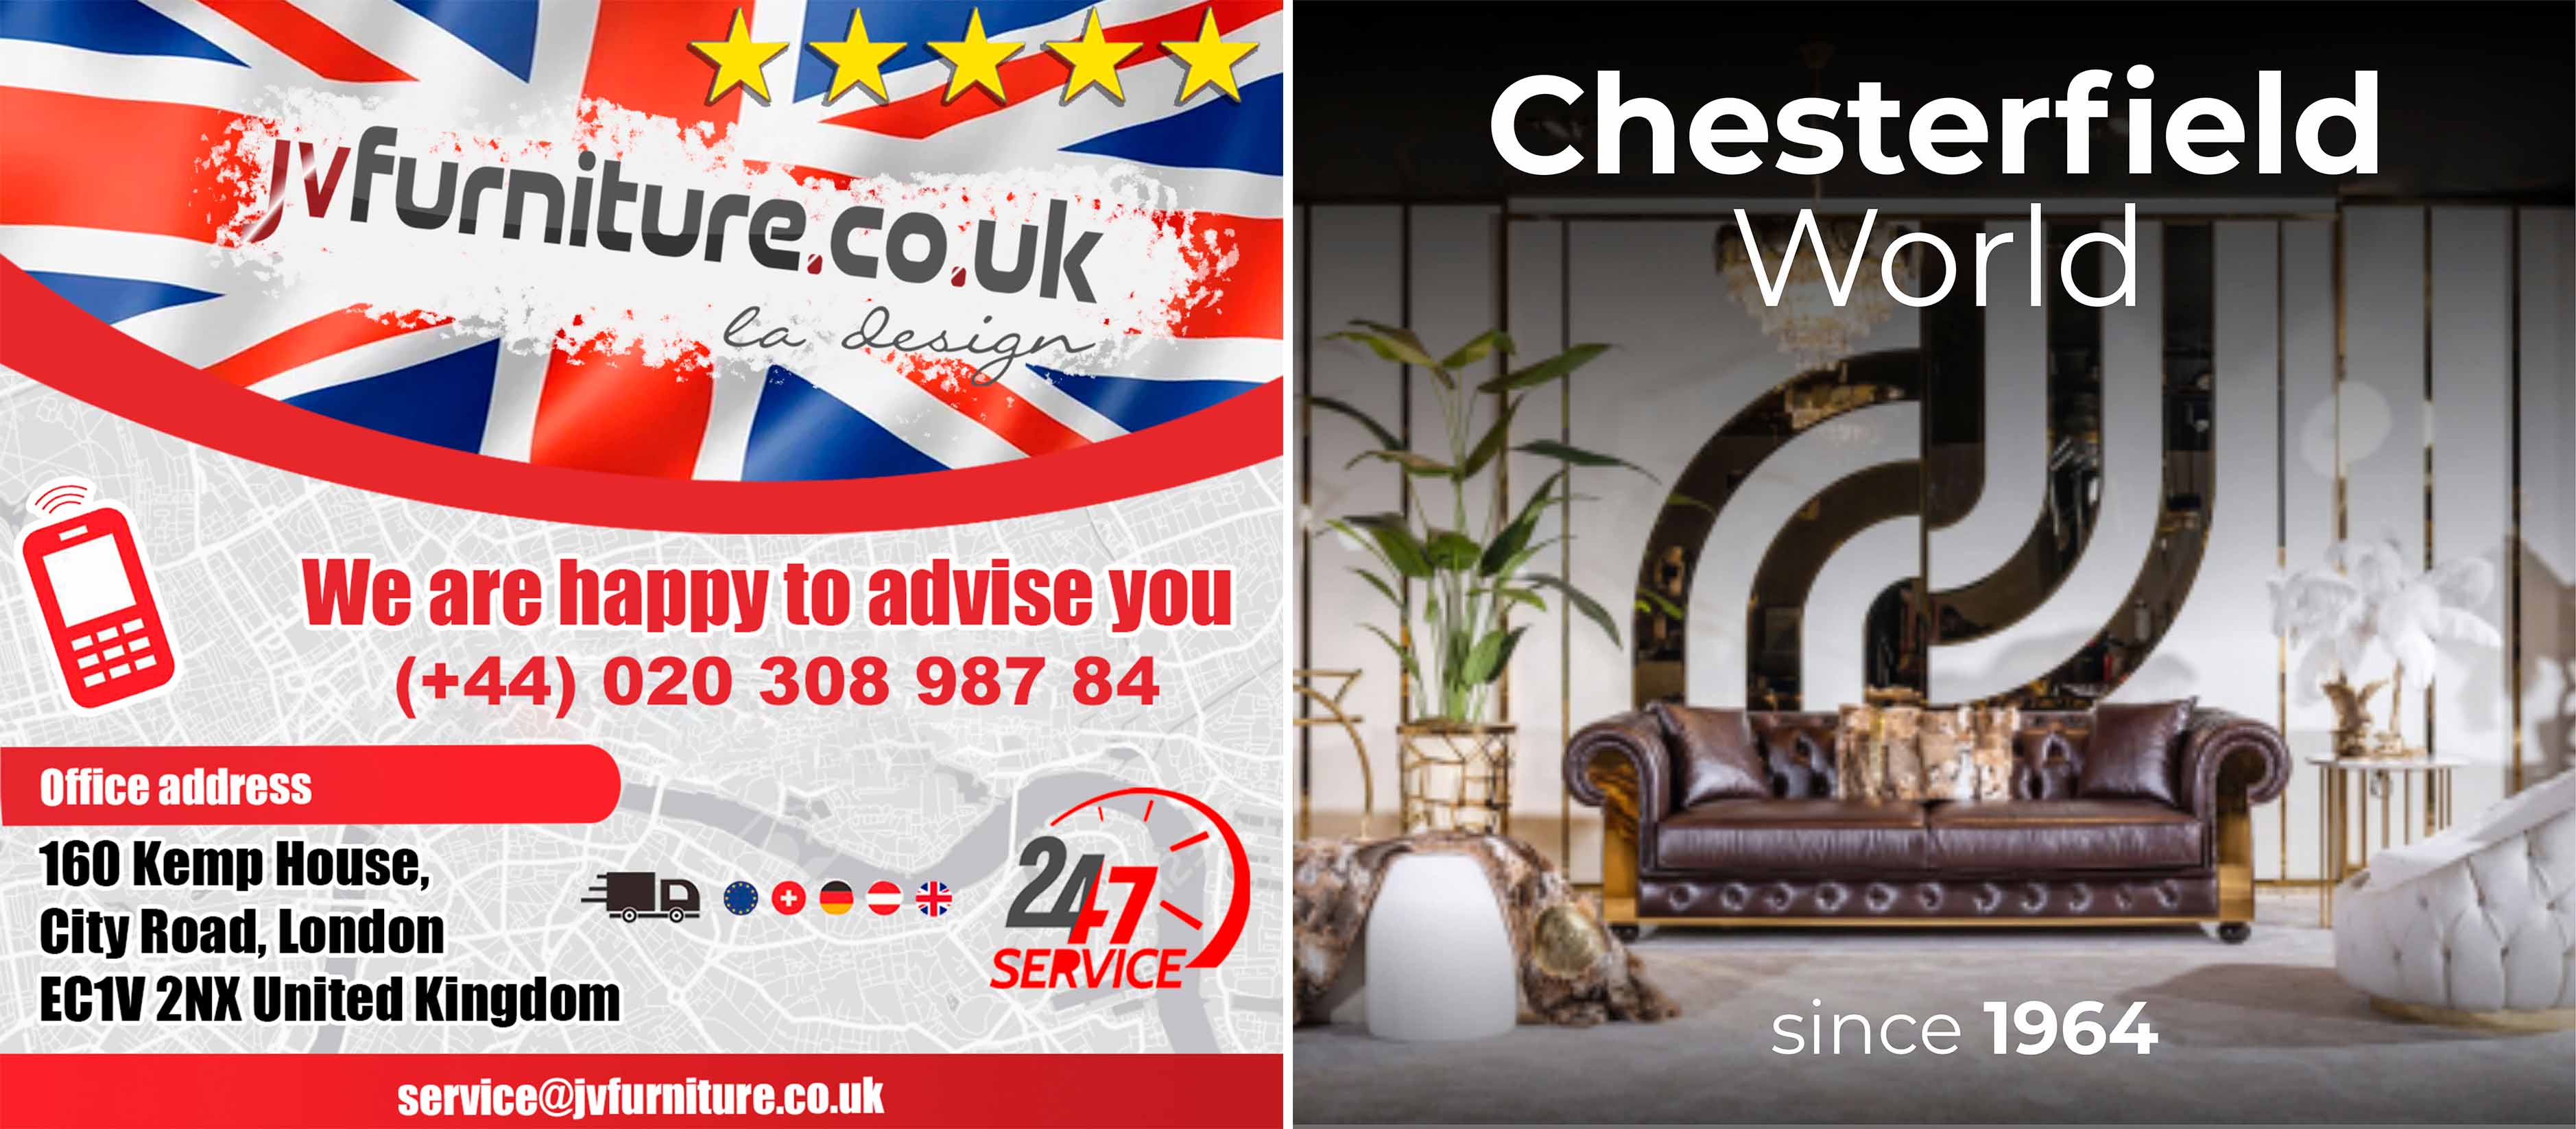 Chesterfield Luxury Furniture